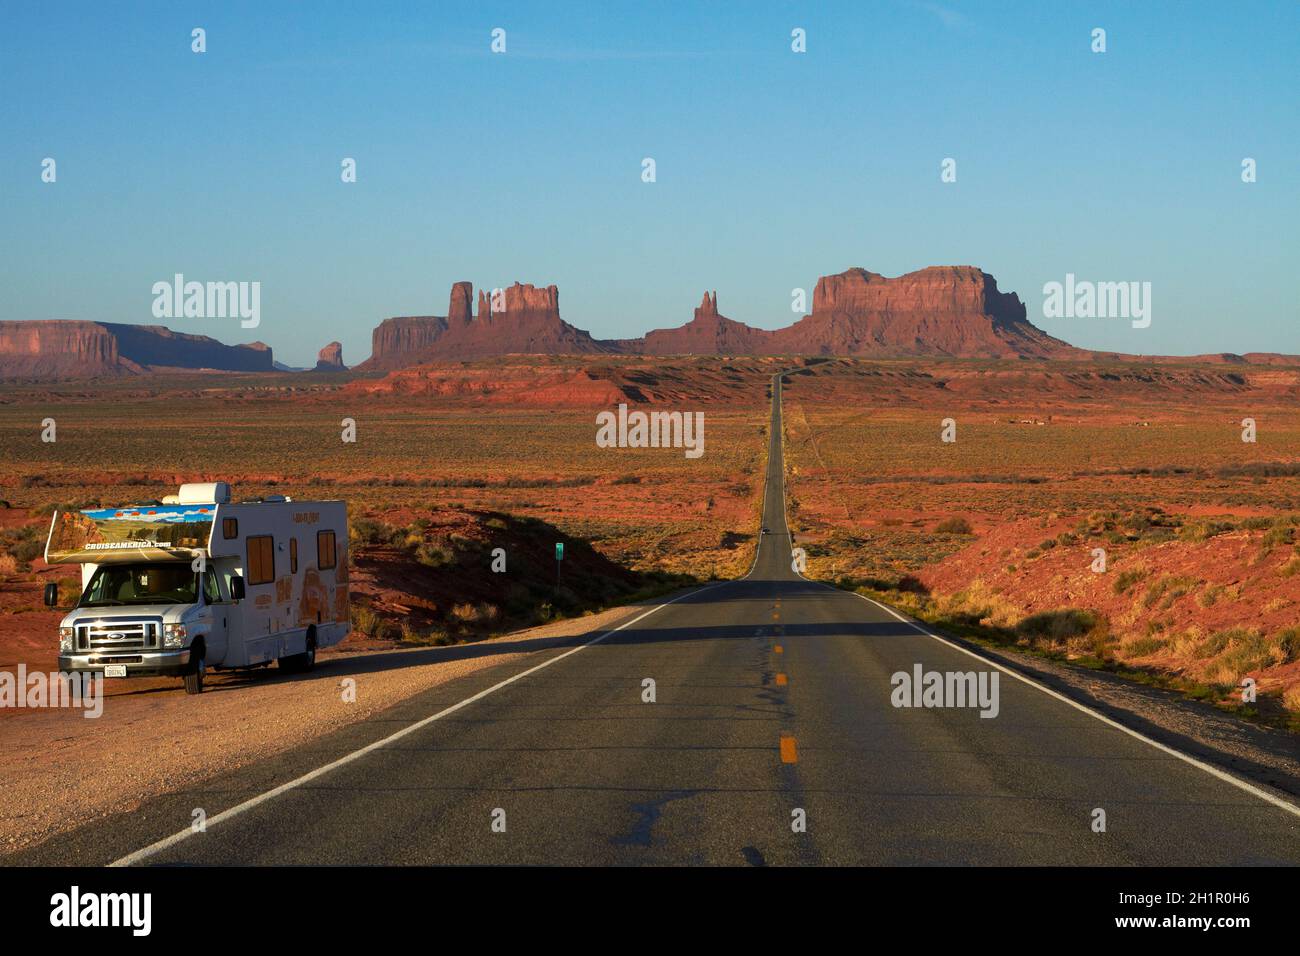 RV beside U.S. Route 163, Monument Valley, Navajo Nation, Utah, near Arizona Border, USA Stock Photo